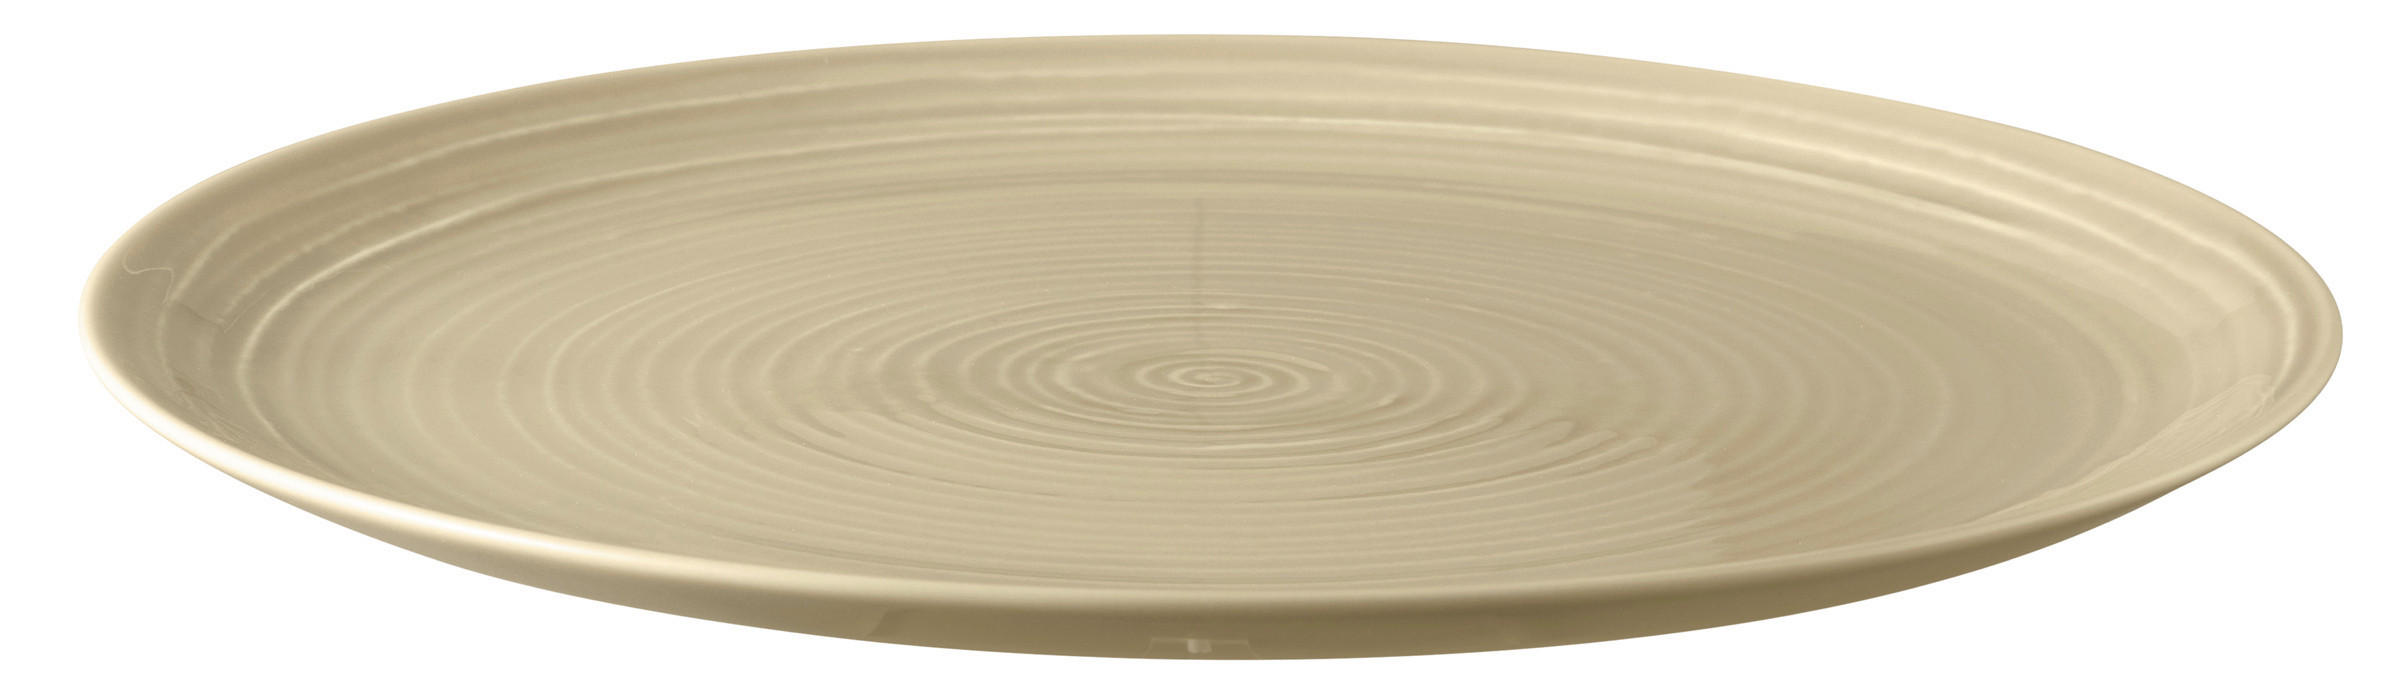 SPEISETELLER Terra Porzellan  - Beige, Basics, Keramik (27,5cm) - Seltmann Weiden